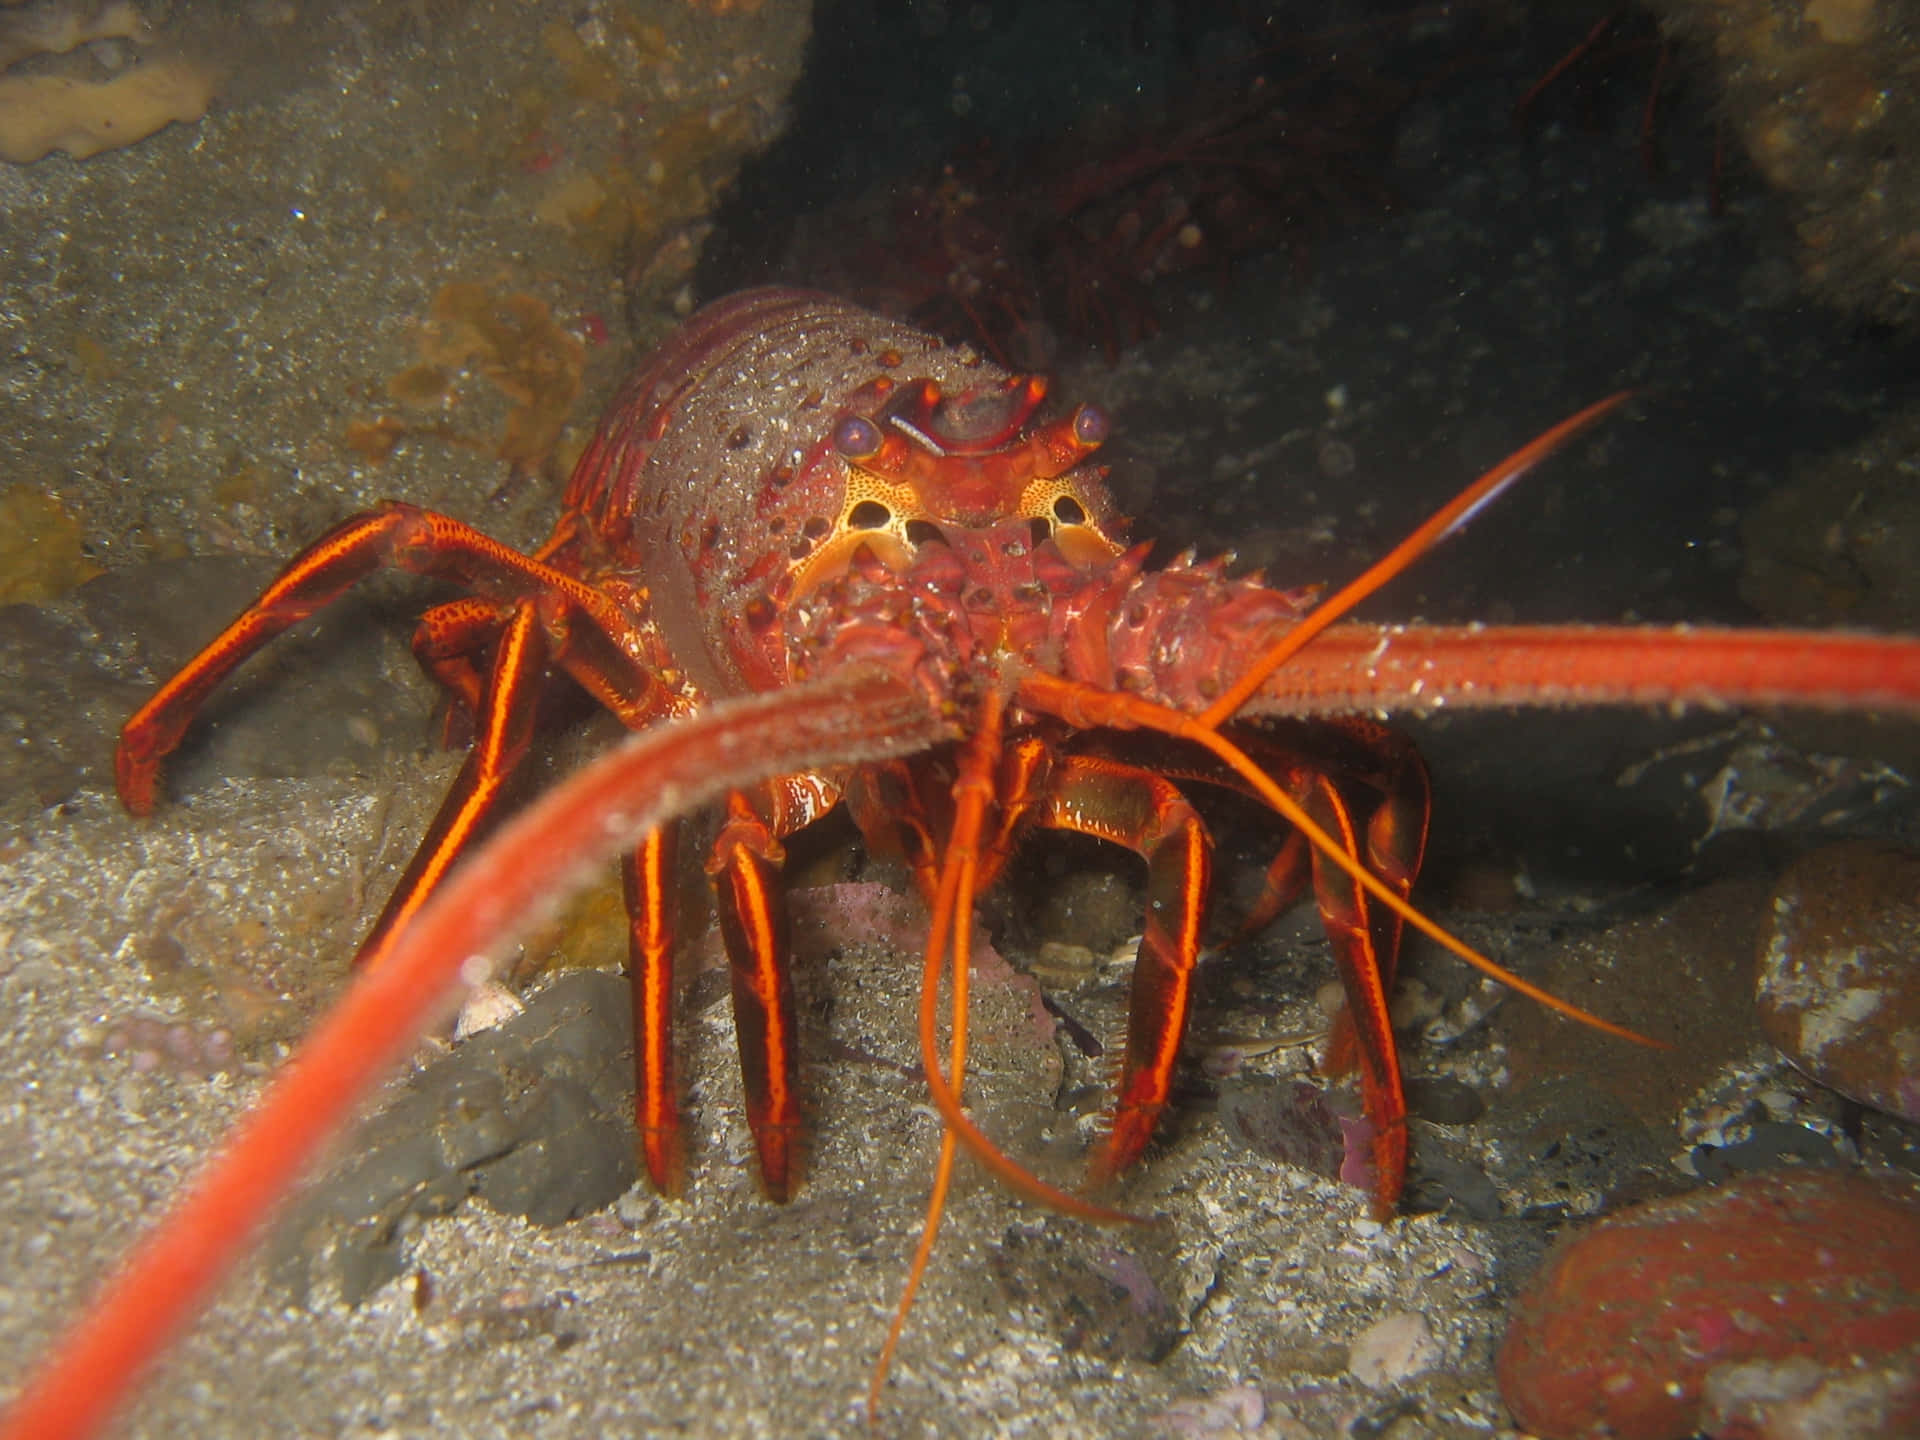 Spiny Lobster Underwater Scene Wallpaper